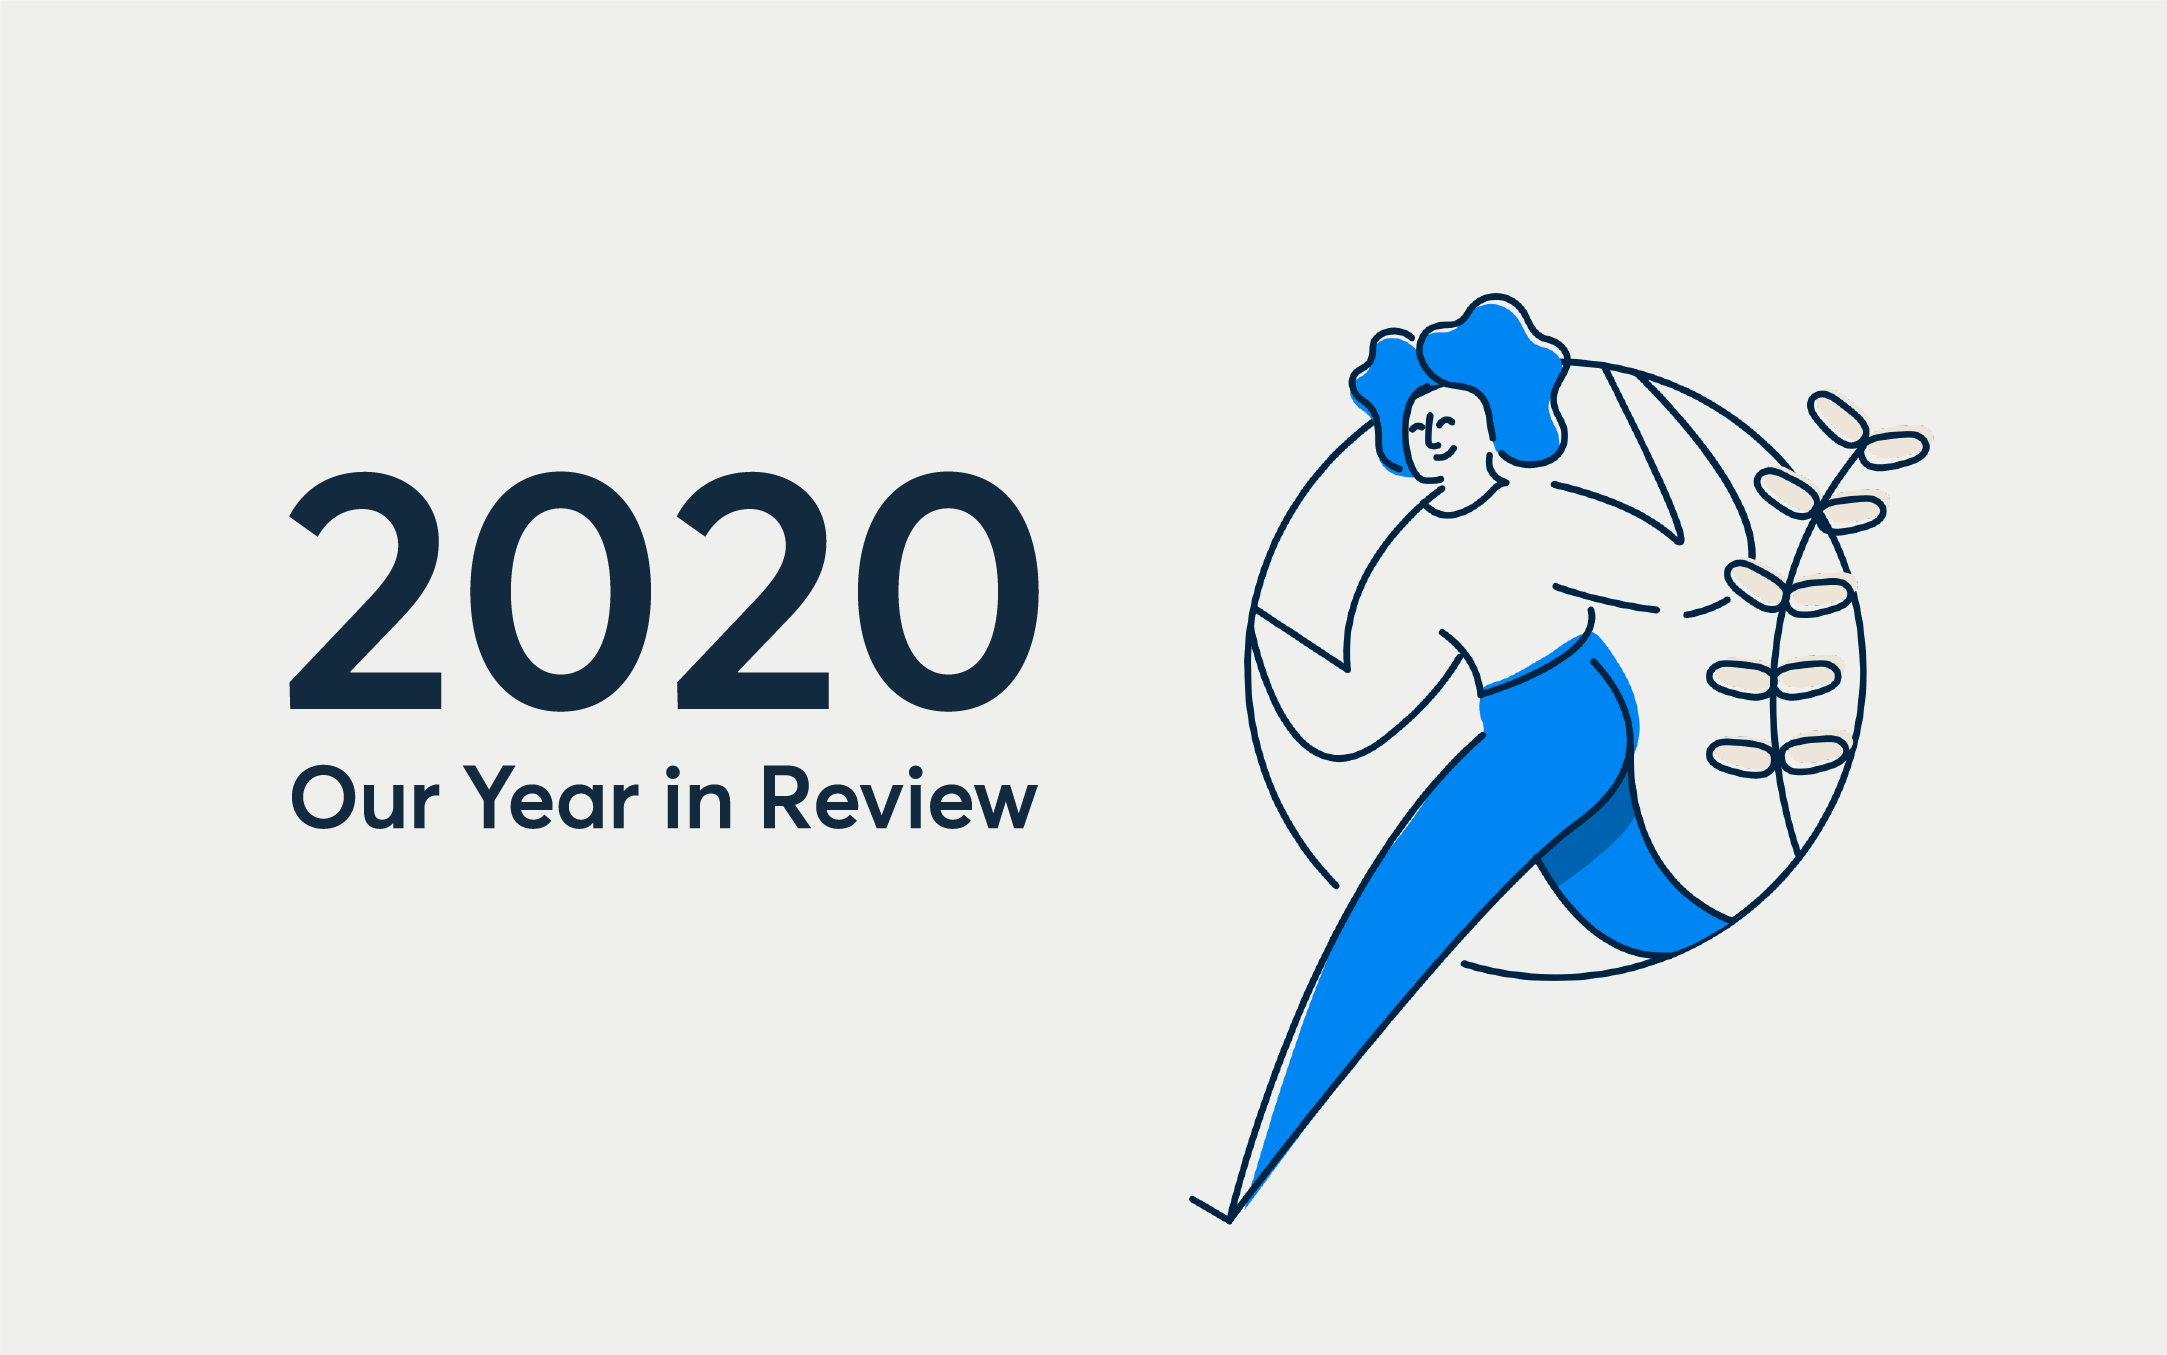 RotaCloud's 2020 in review